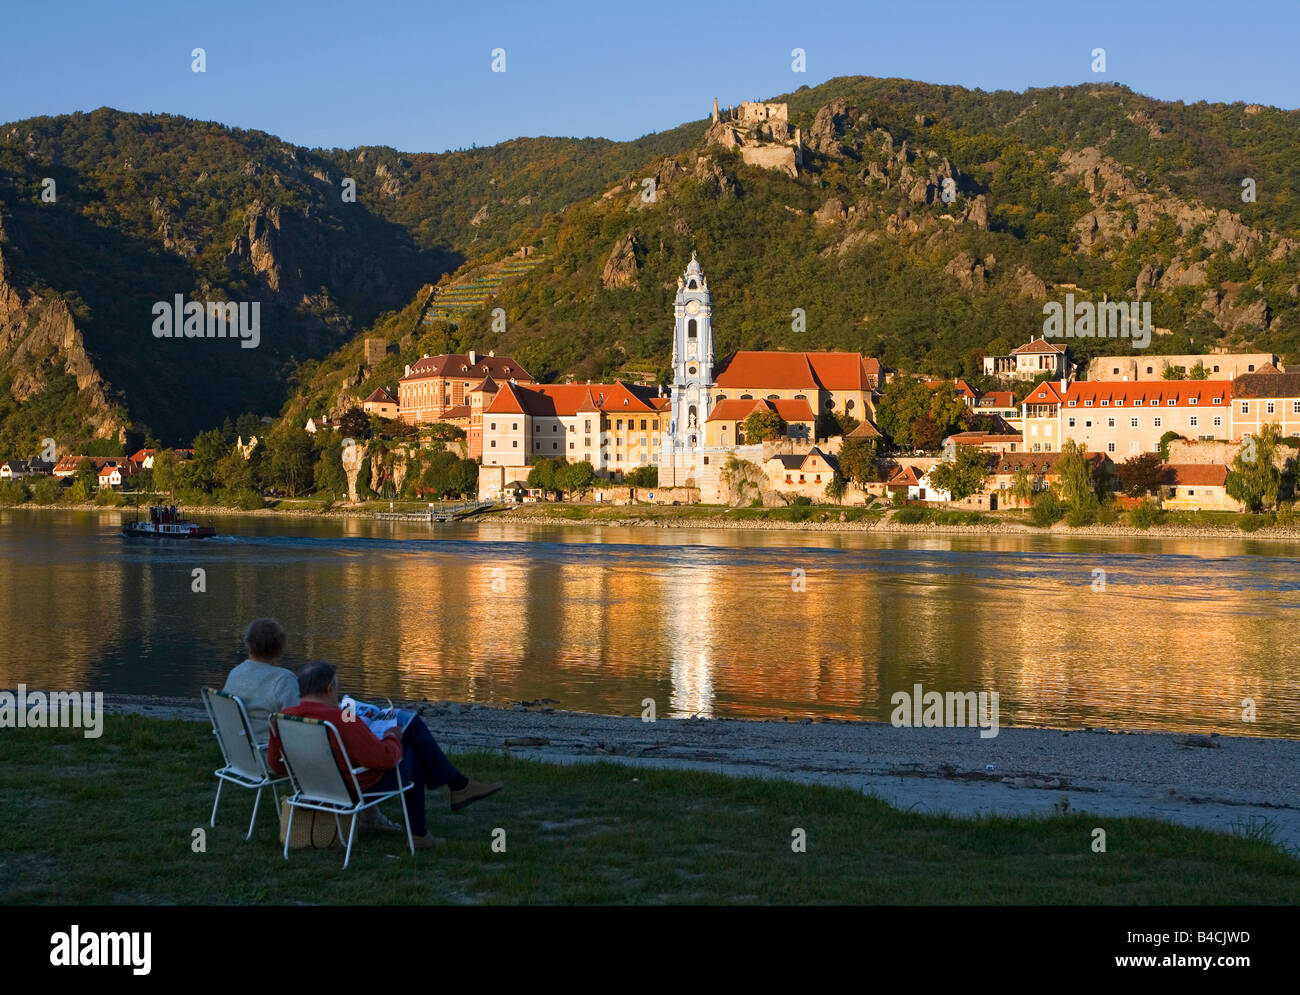 Tourists watching Durstein on Danube River in Austria Stock Photo